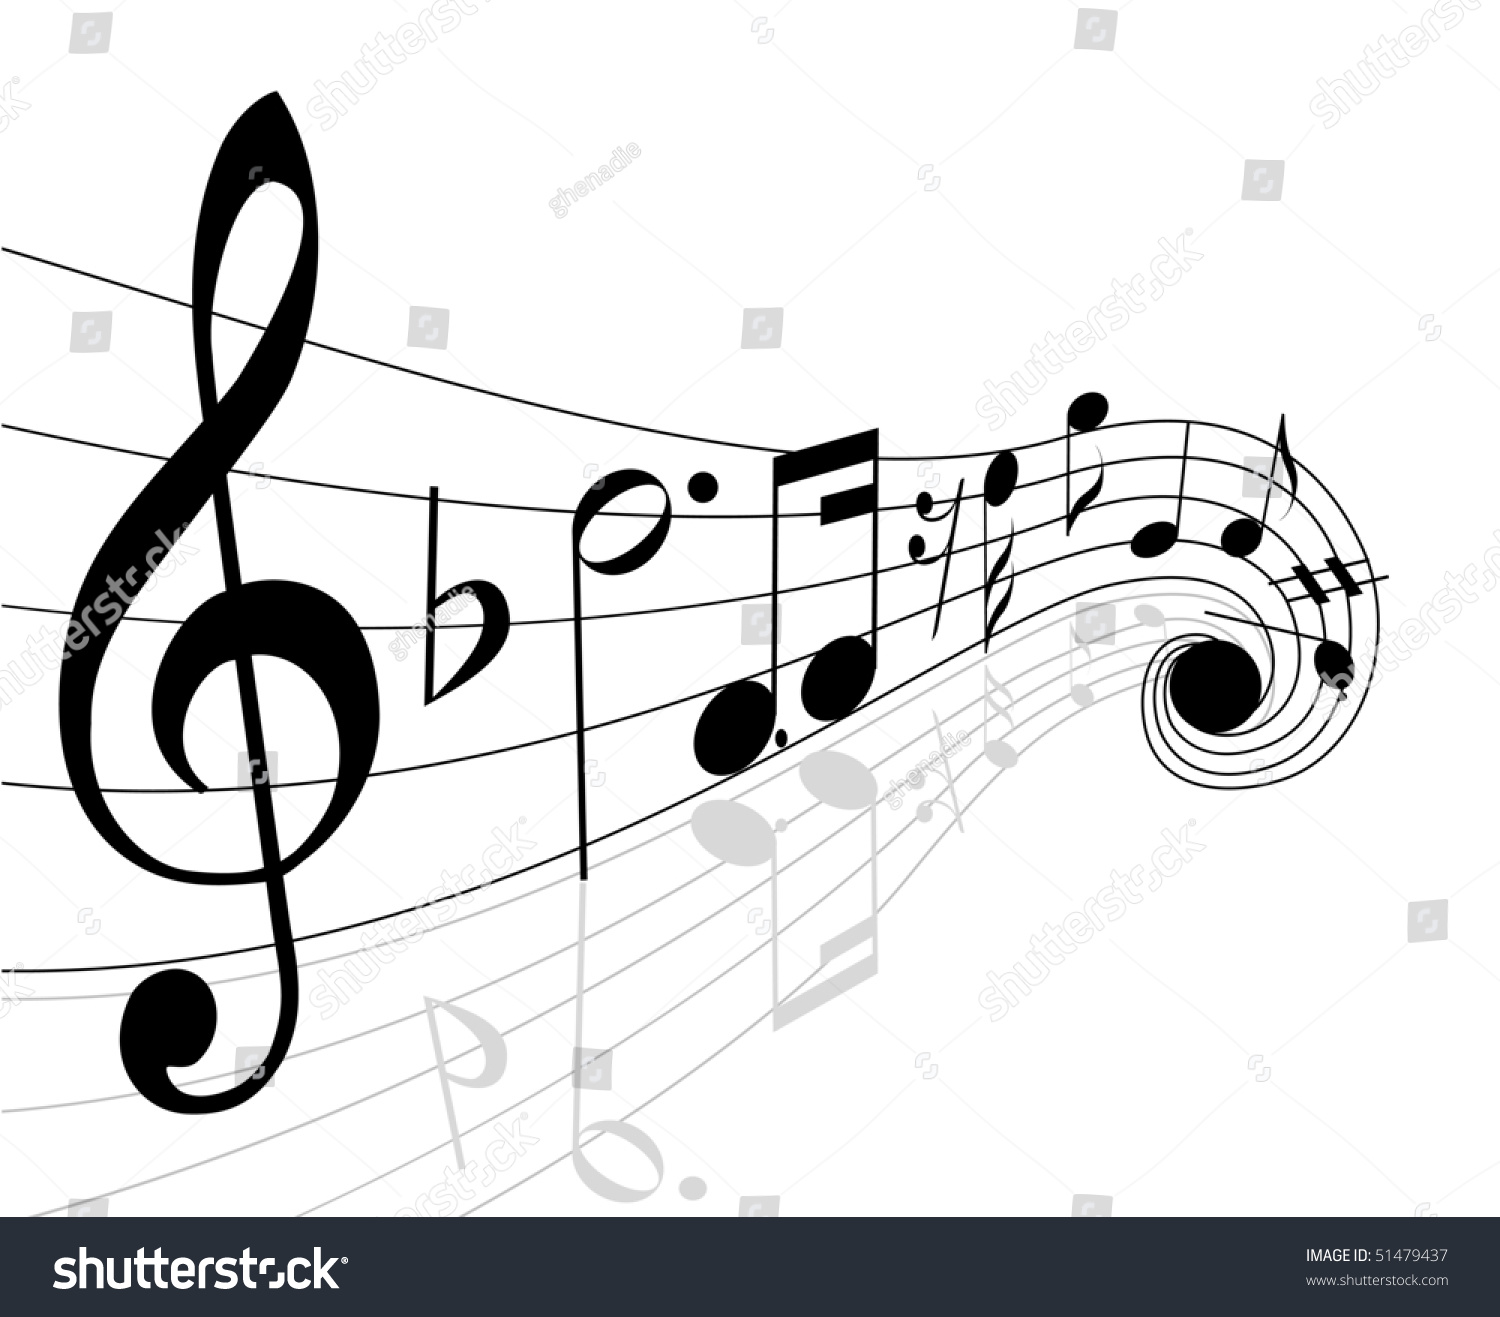 Musical Notes Stock Vector Illustration 51479437 : Shutterstock